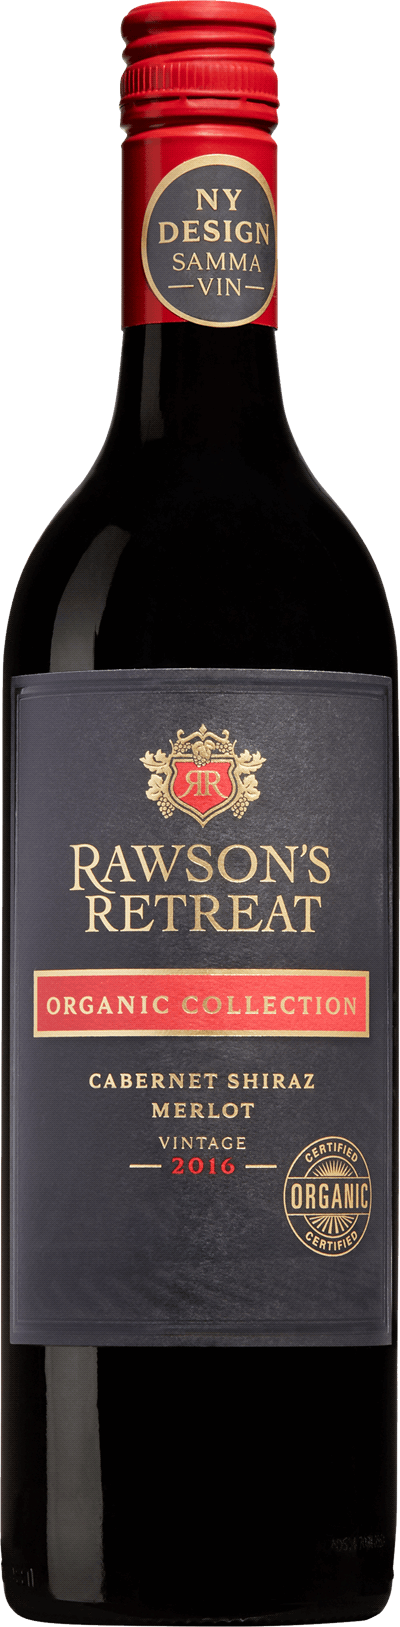 Rawson's Retreat Organic Series Cabernet Sauvignon Shiraz Merlot, 2018